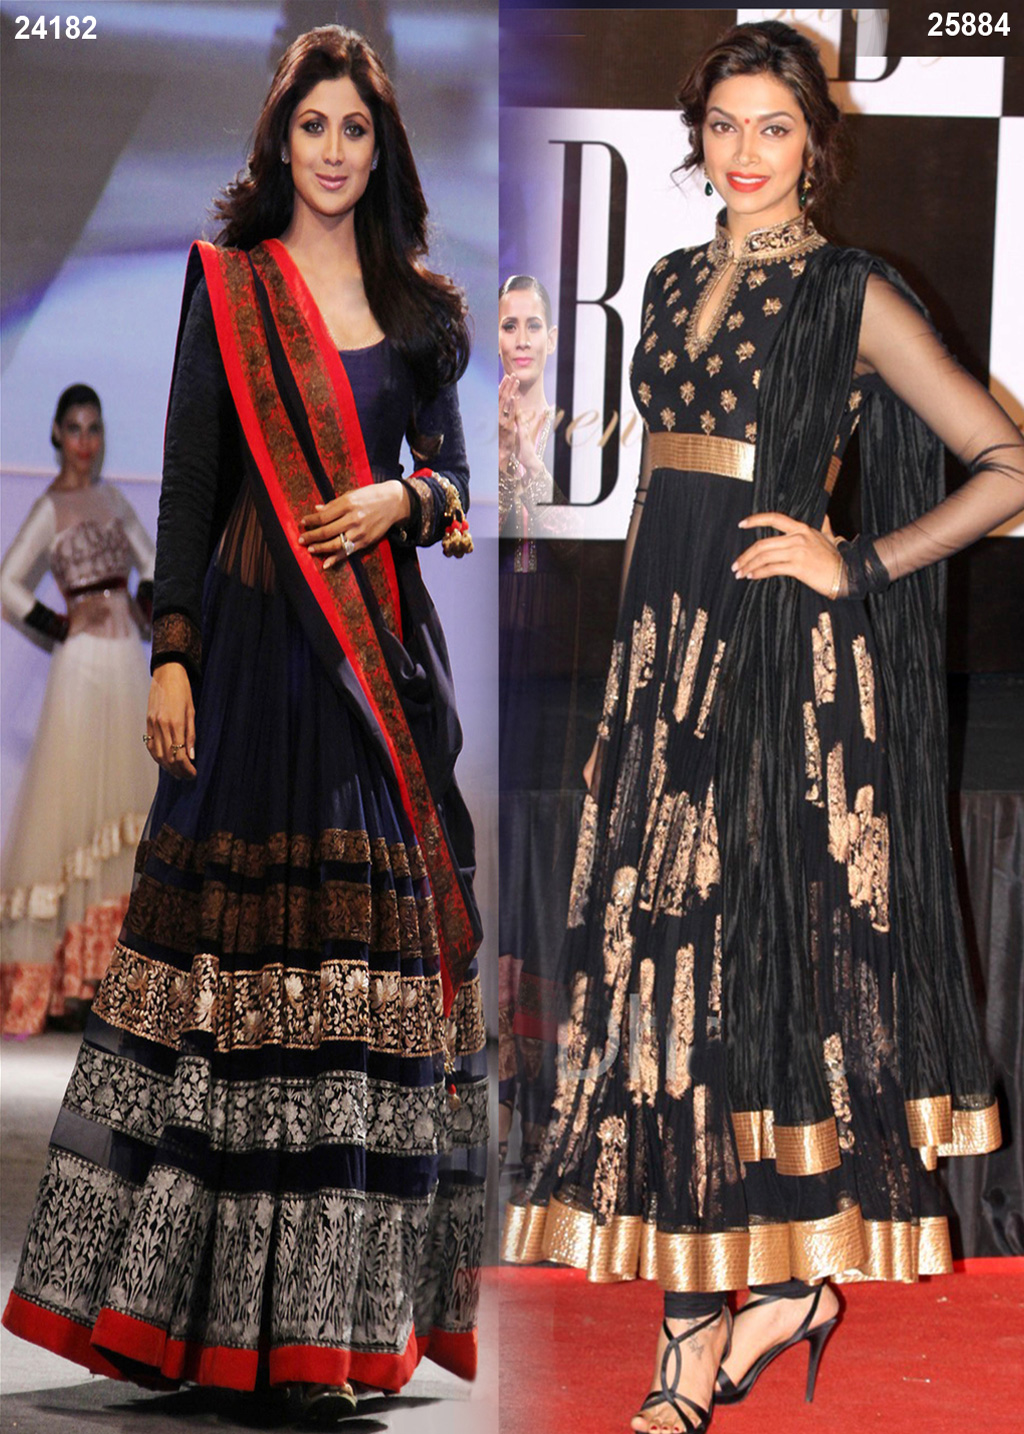 Shilpa Blue Net Anarkali Salwar Suit & Deepika Padukone Black Anarkali Suit 25887